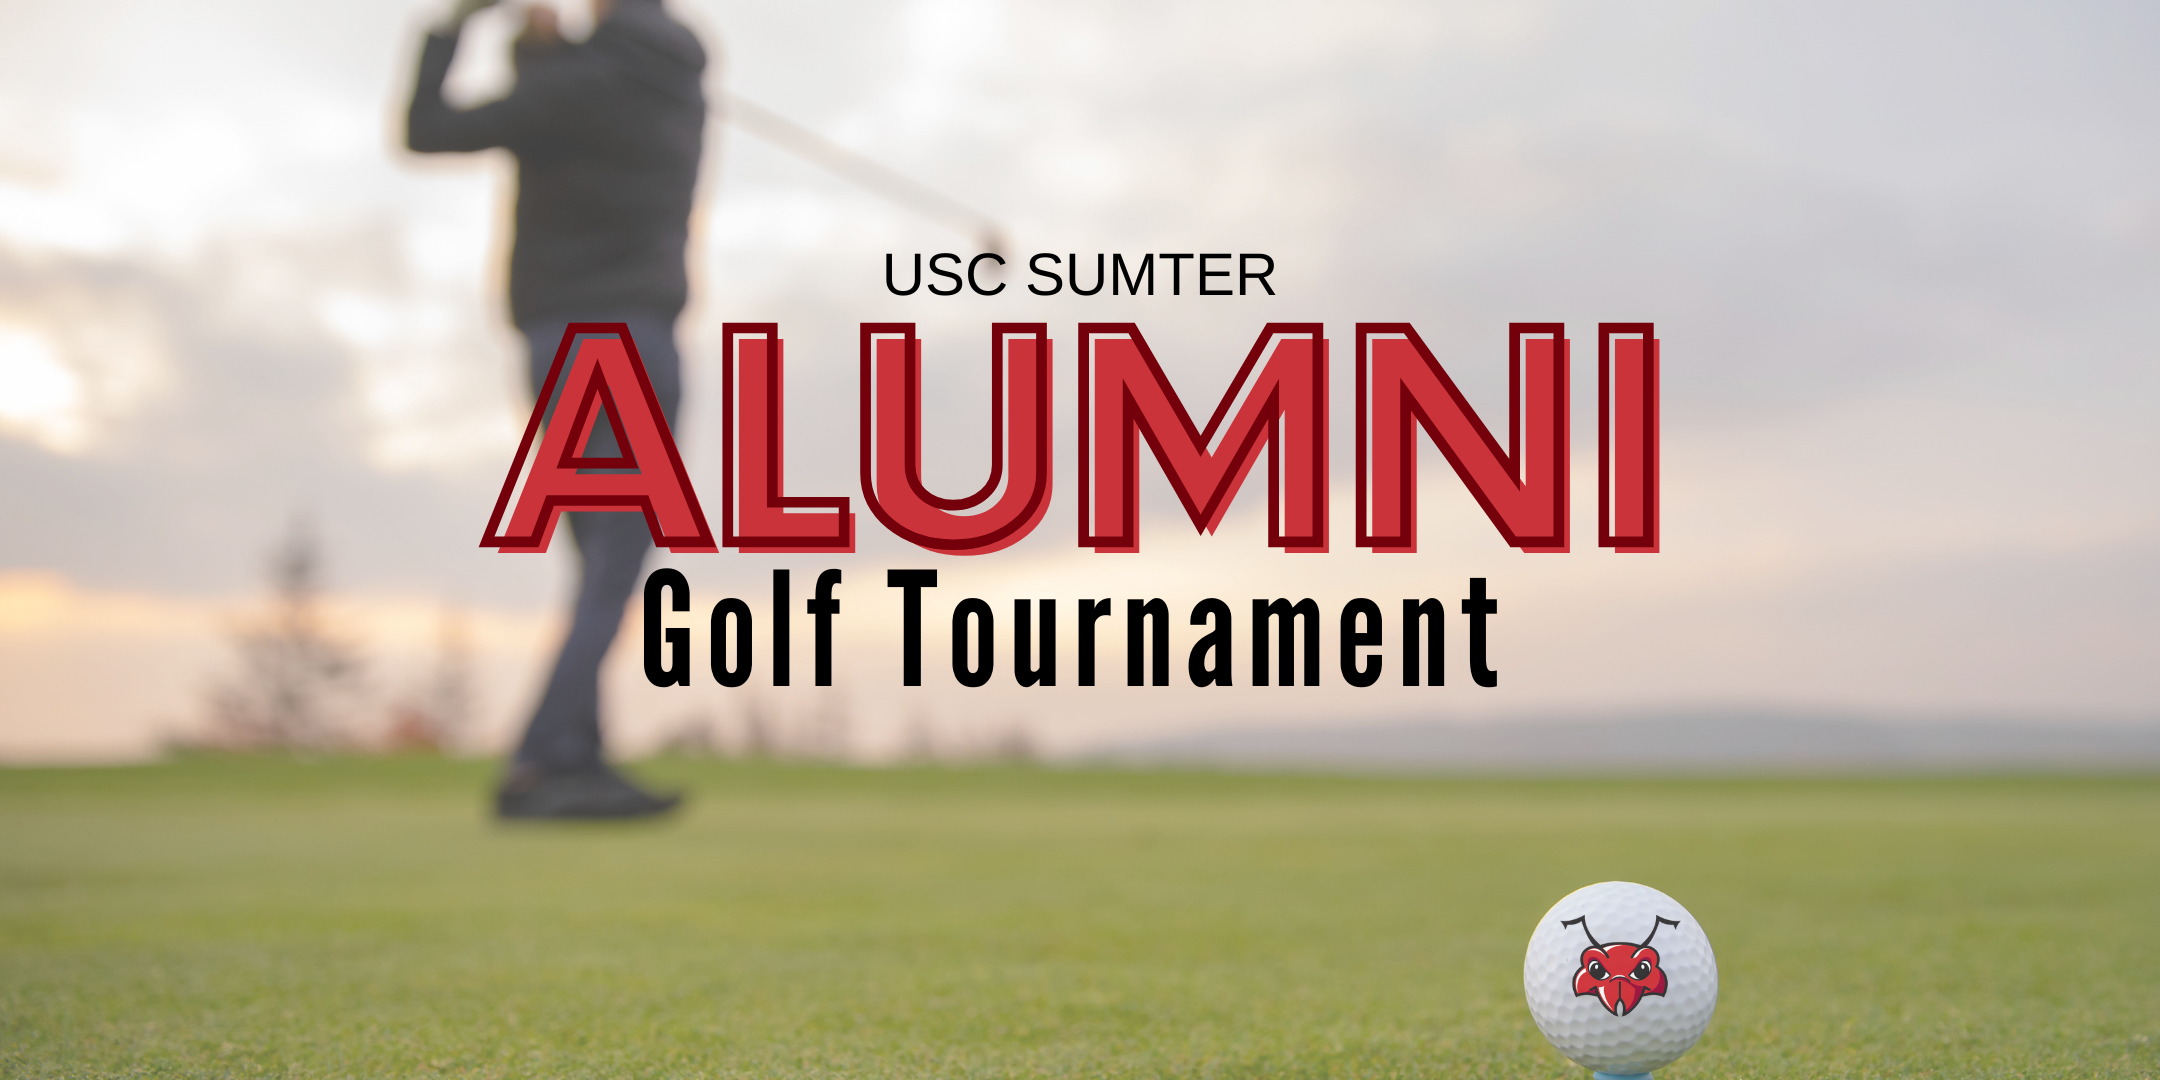 2023 Alumni Golf Tournament